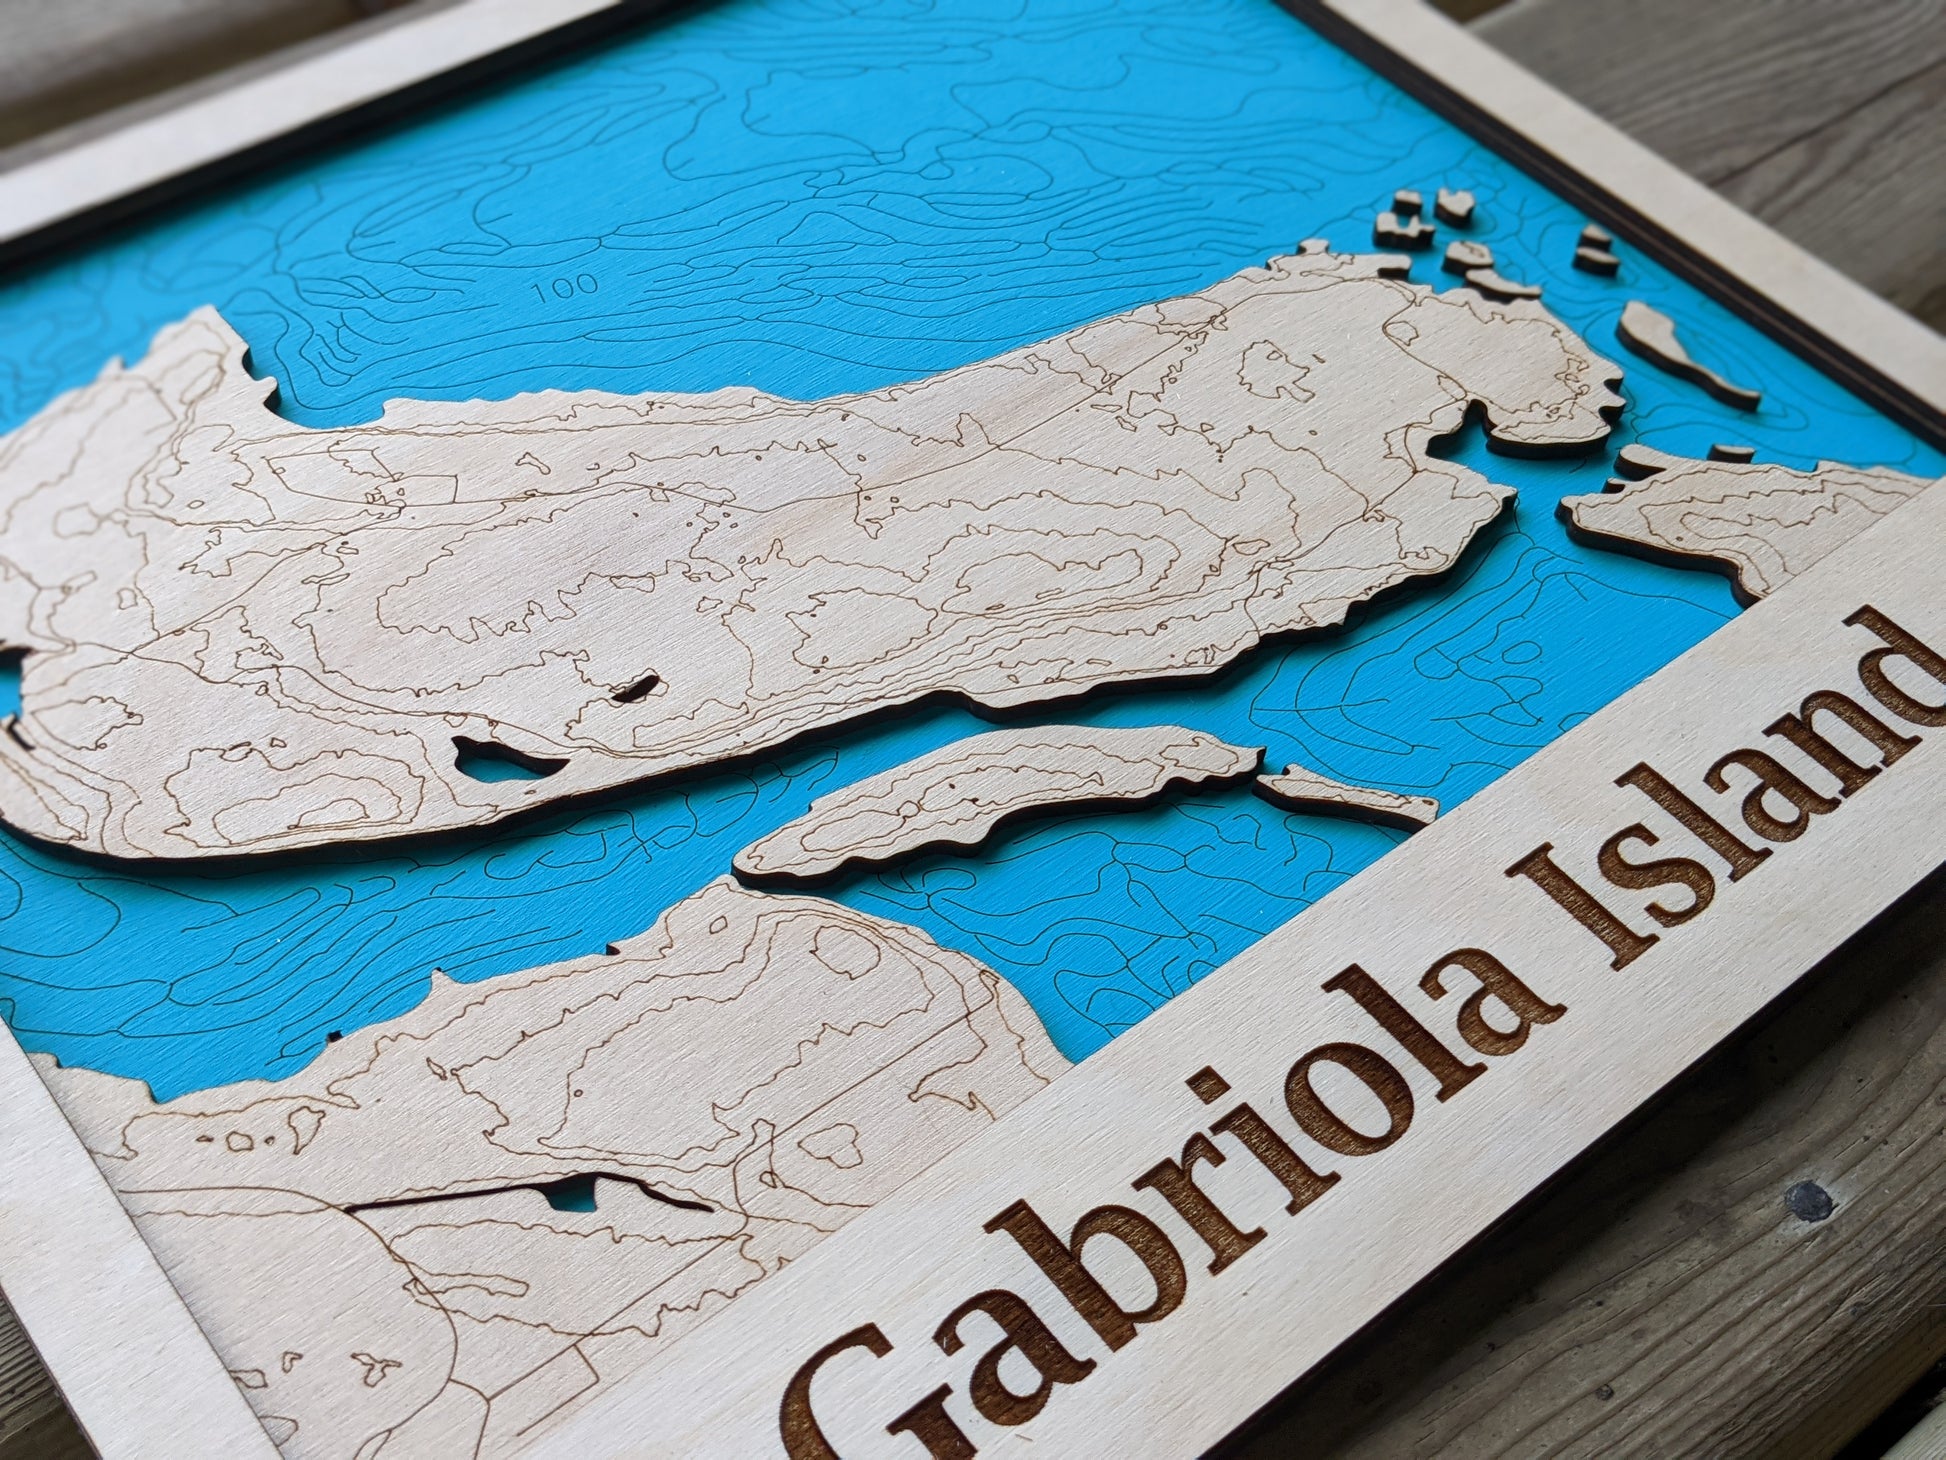 Gabriola Island Wooden Topographic Map Map 50.00